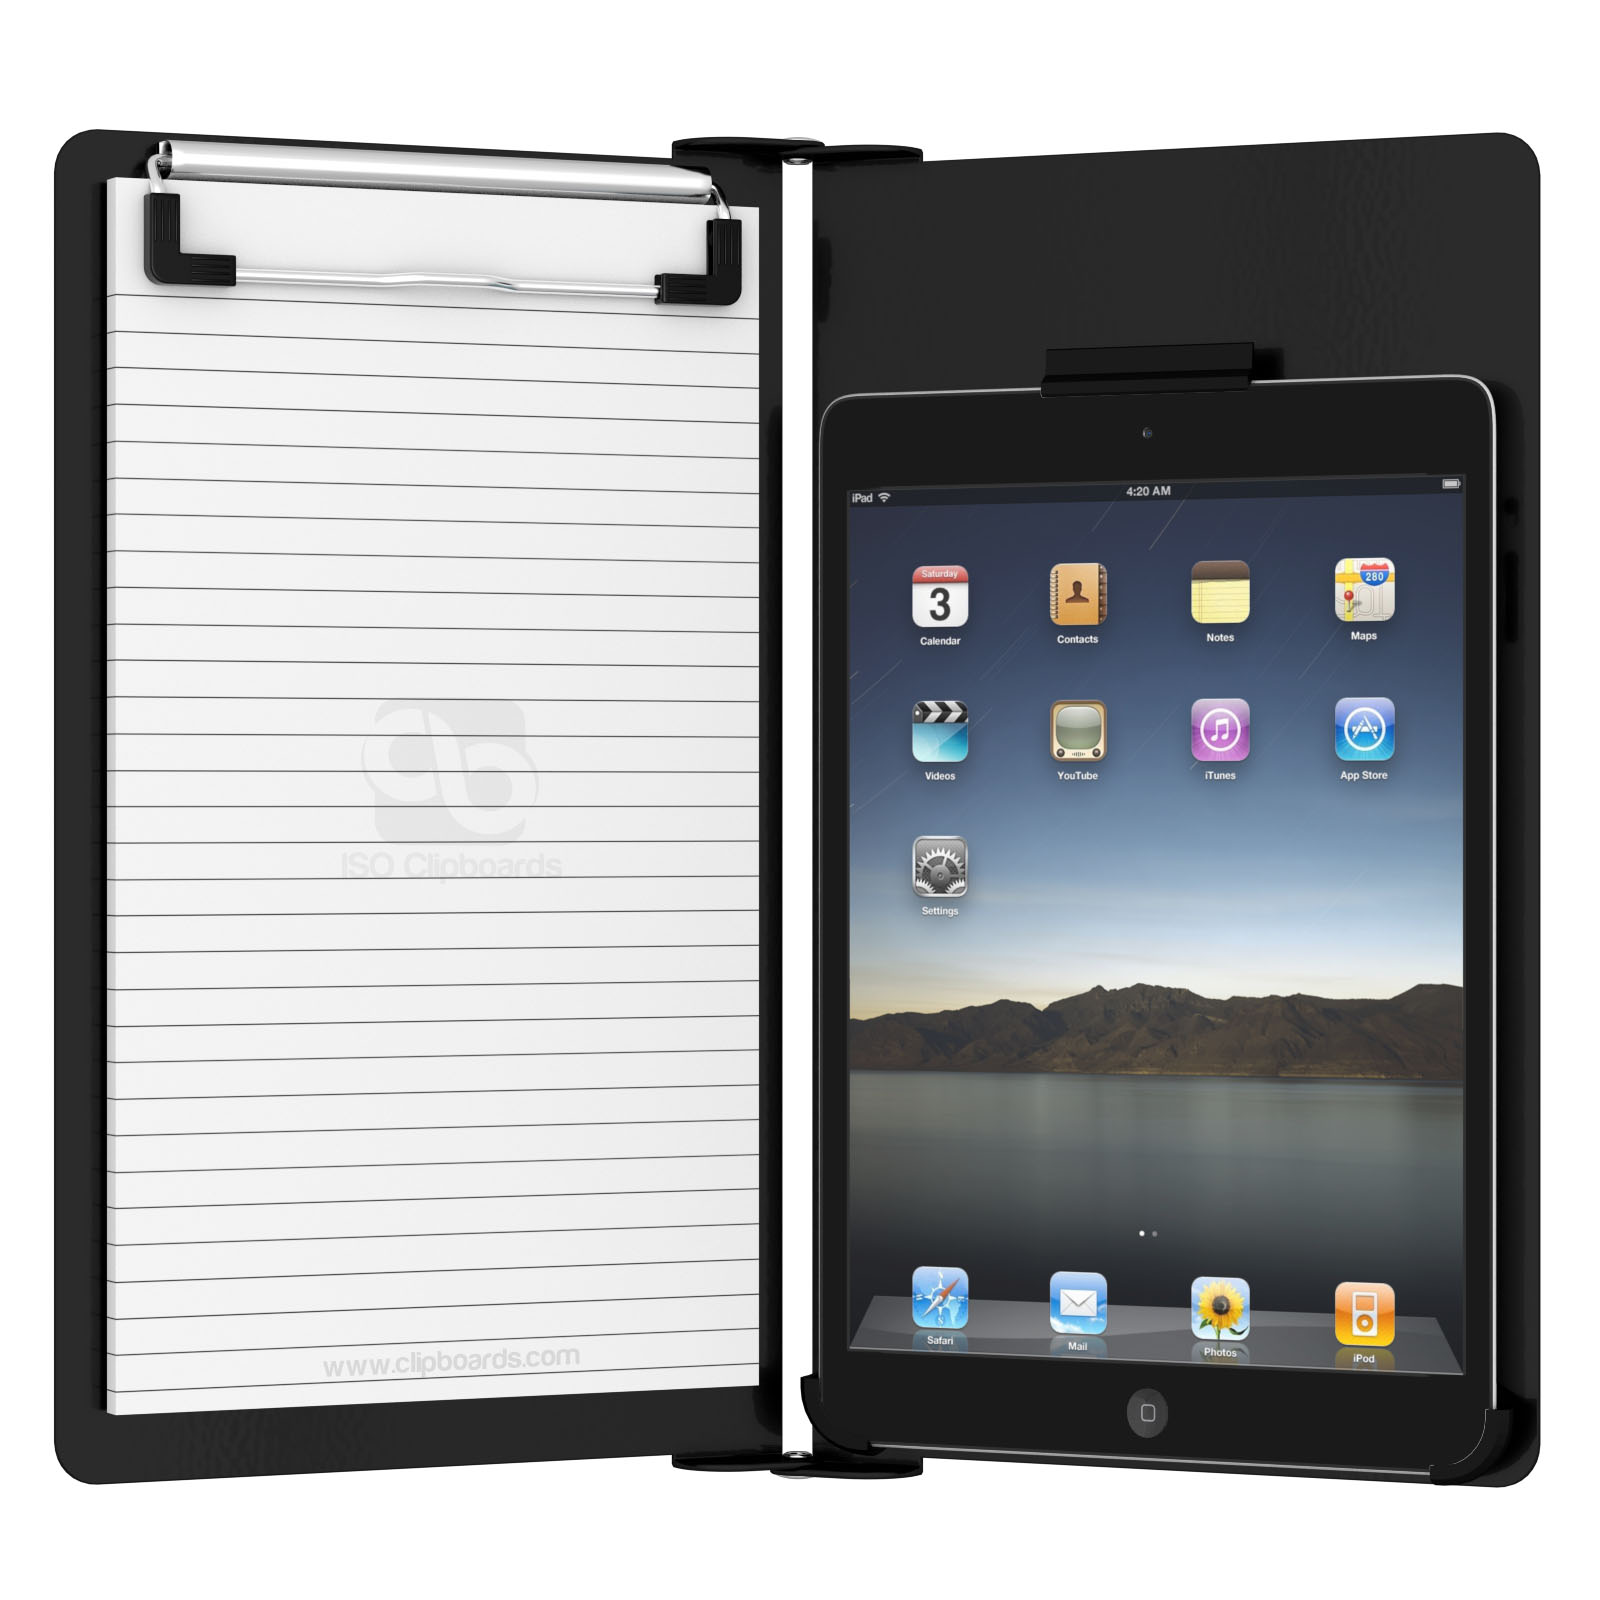 iPad Mini WhiteCoat Clipboard - Respiratory Edition